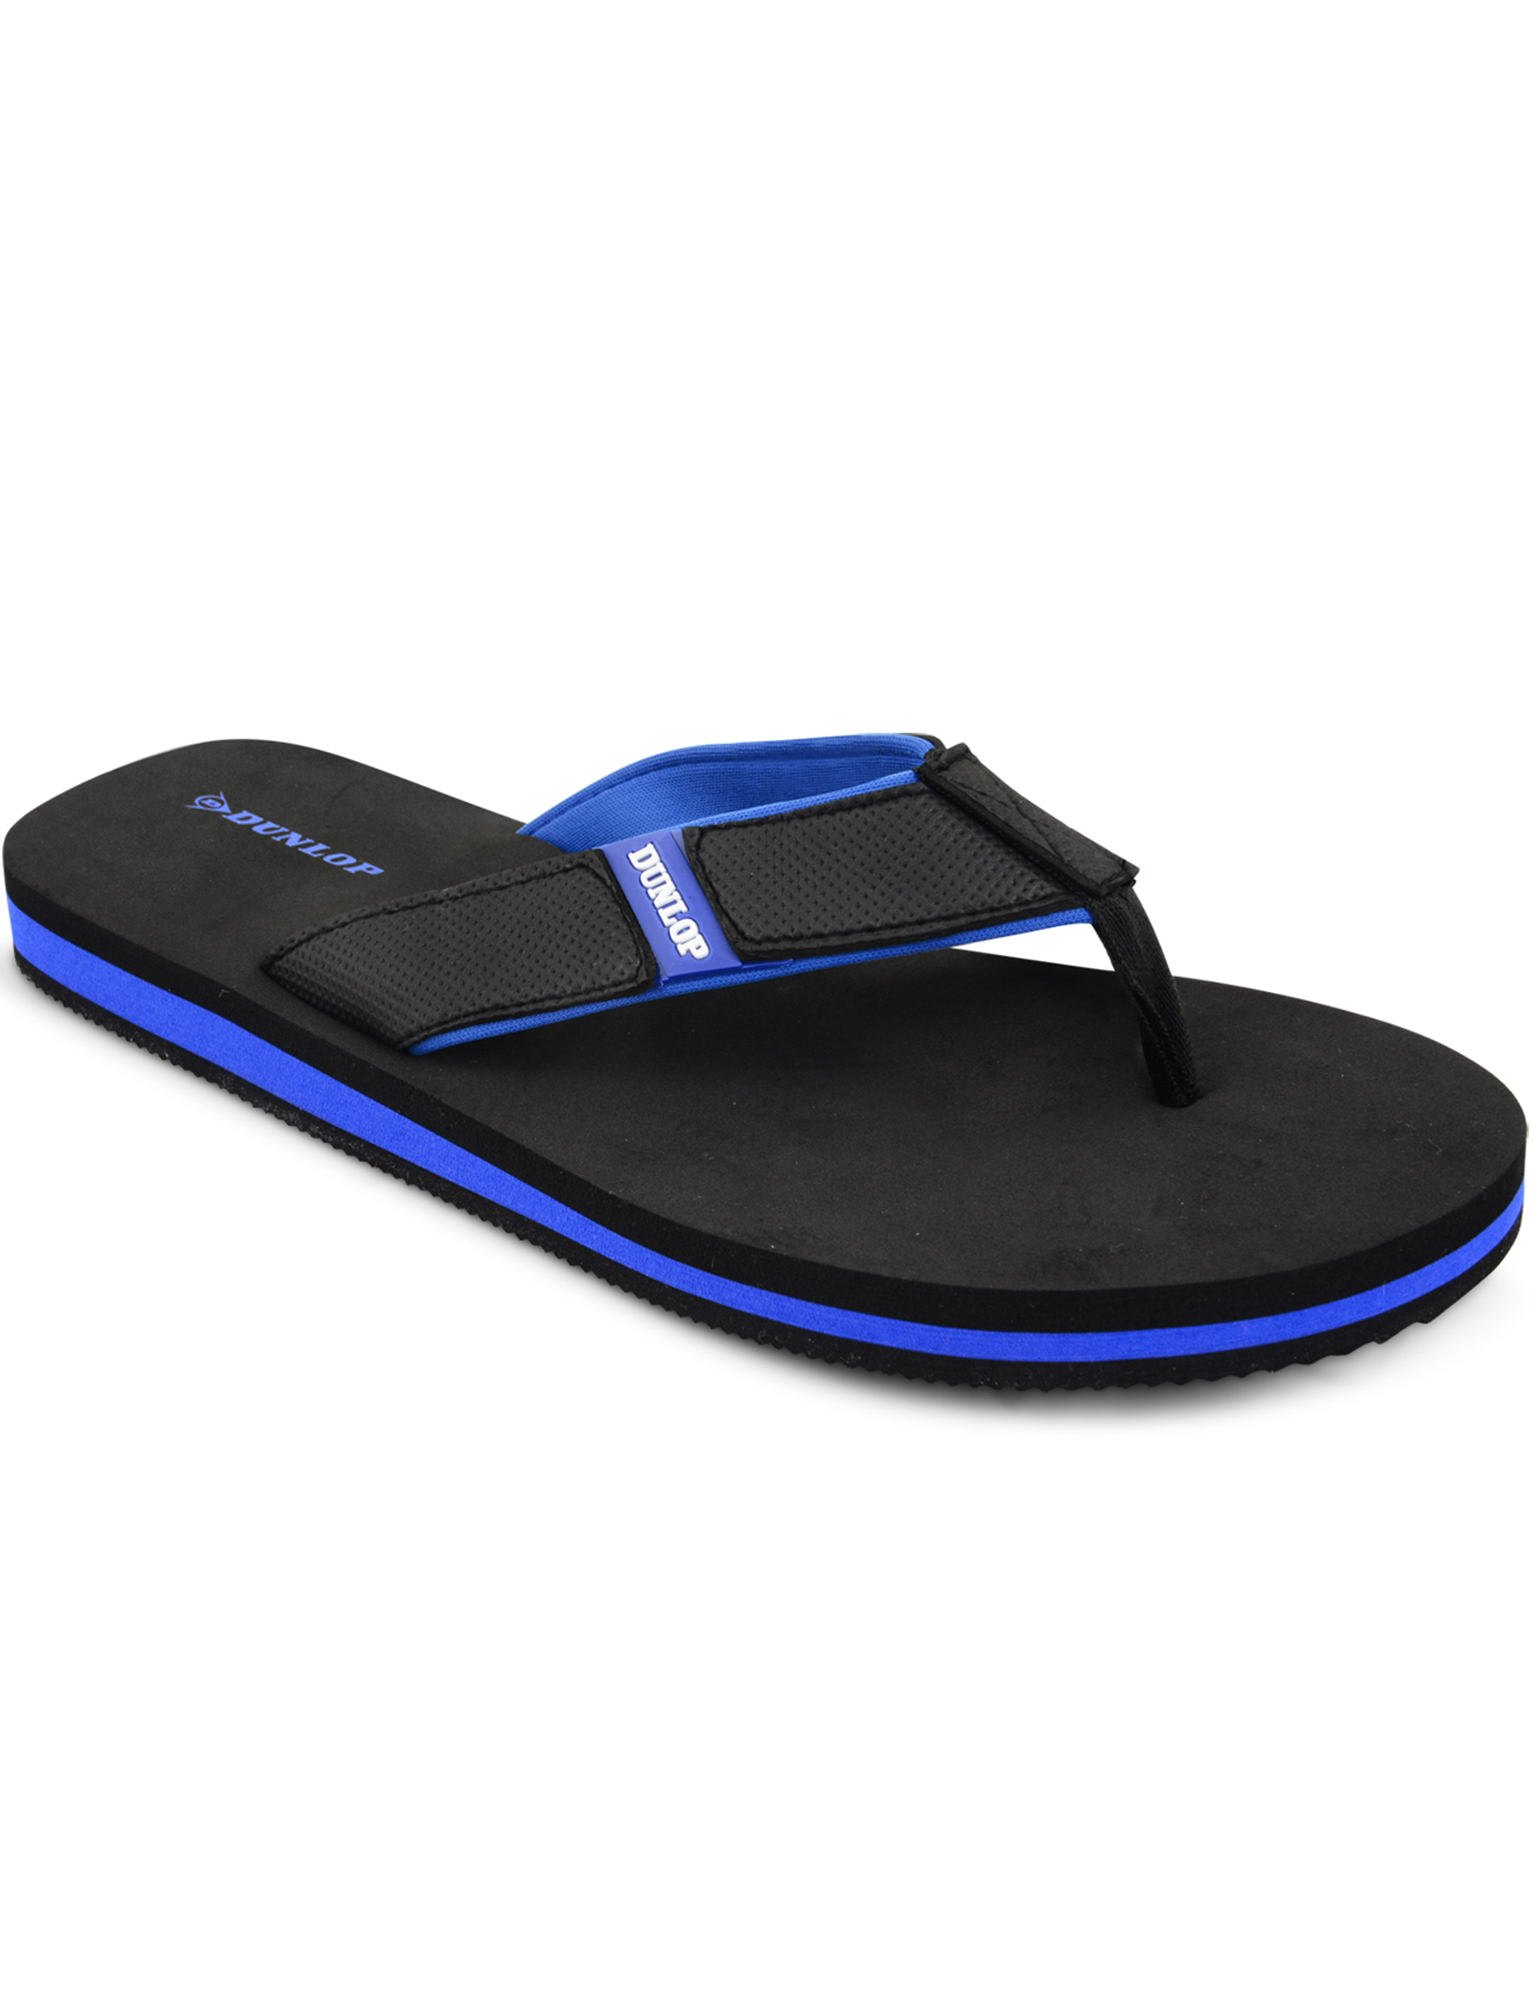 Mens Summer Holiday Beach Flip Flops Slip On Slippers Sandals Shoes ...